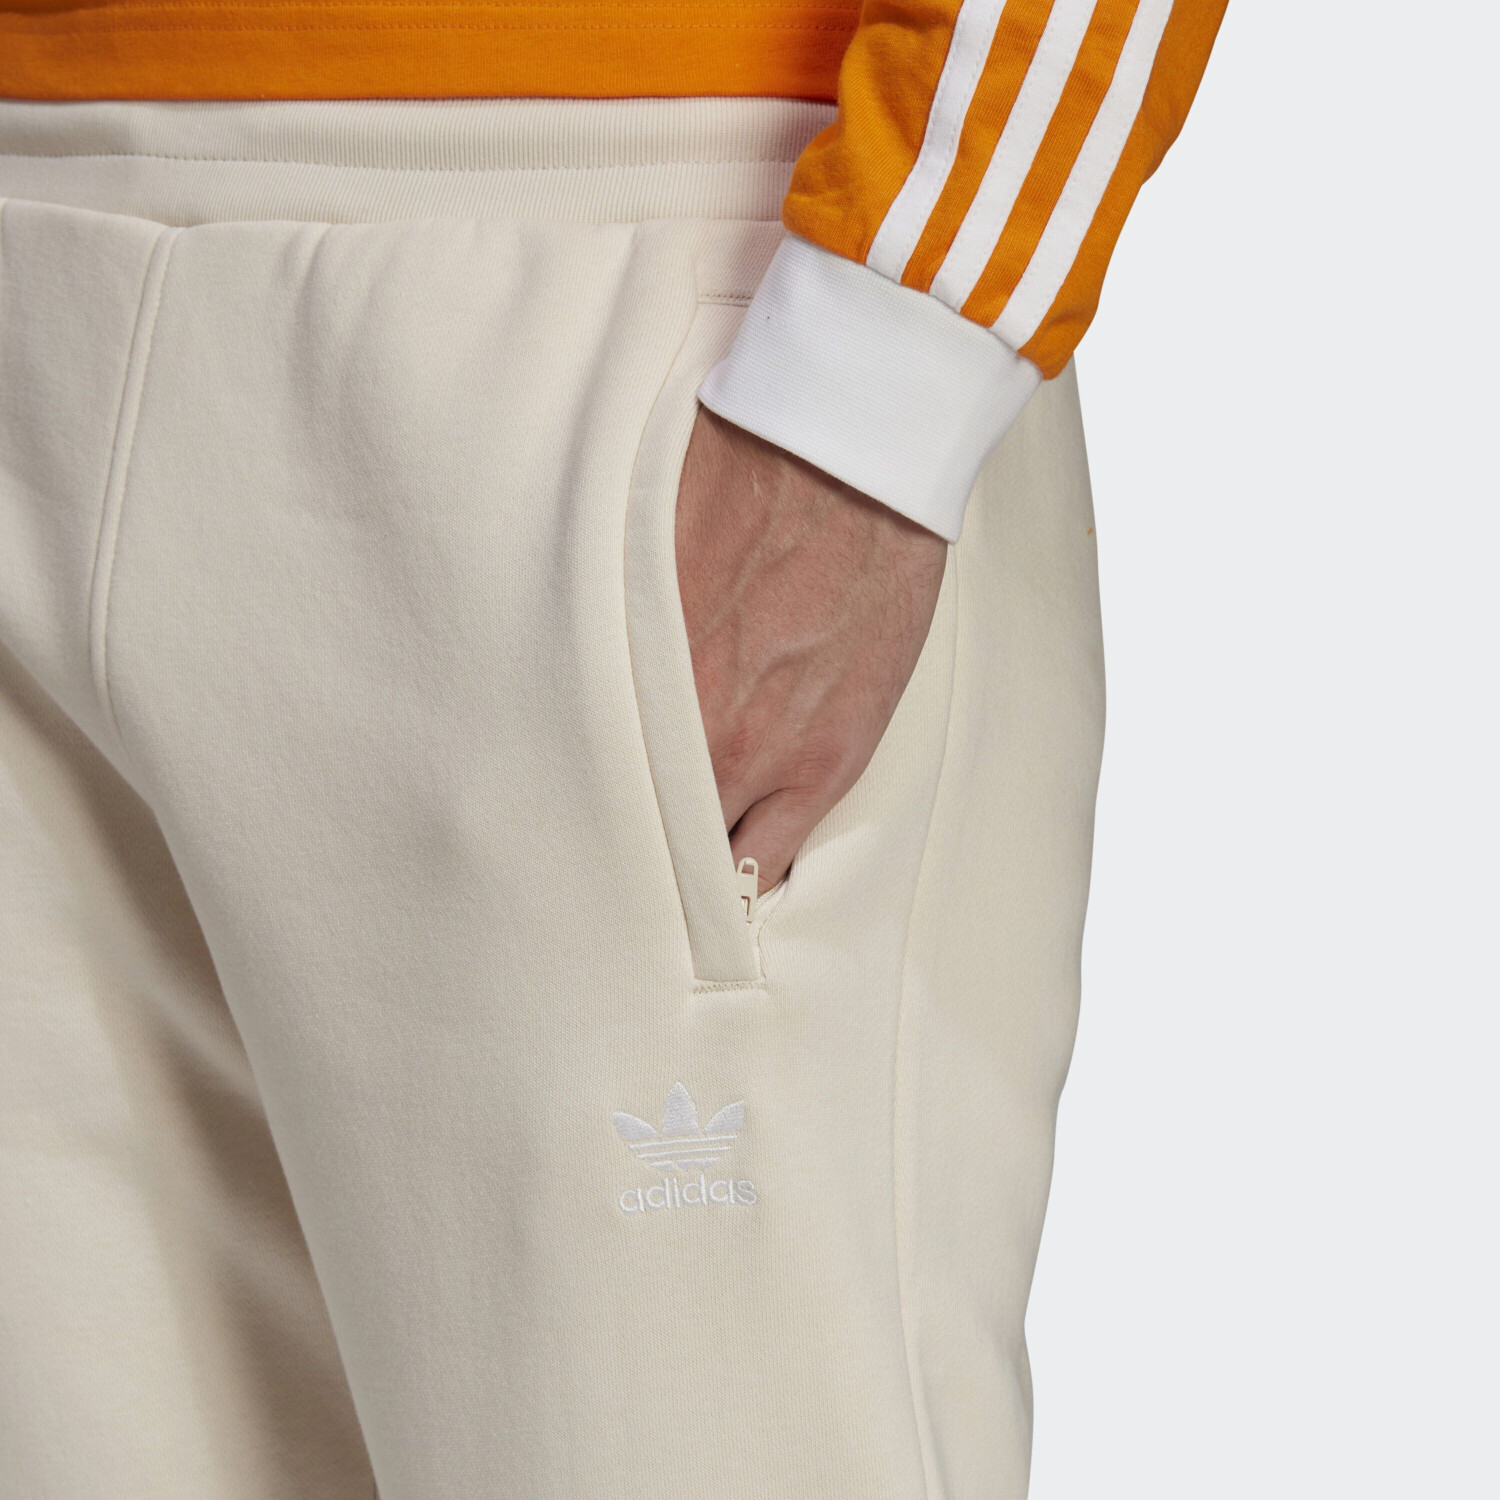 Preisvergleich Adicolor € wonder bei Essentials Joggers ab 38,99 Trefoil Adidas white |